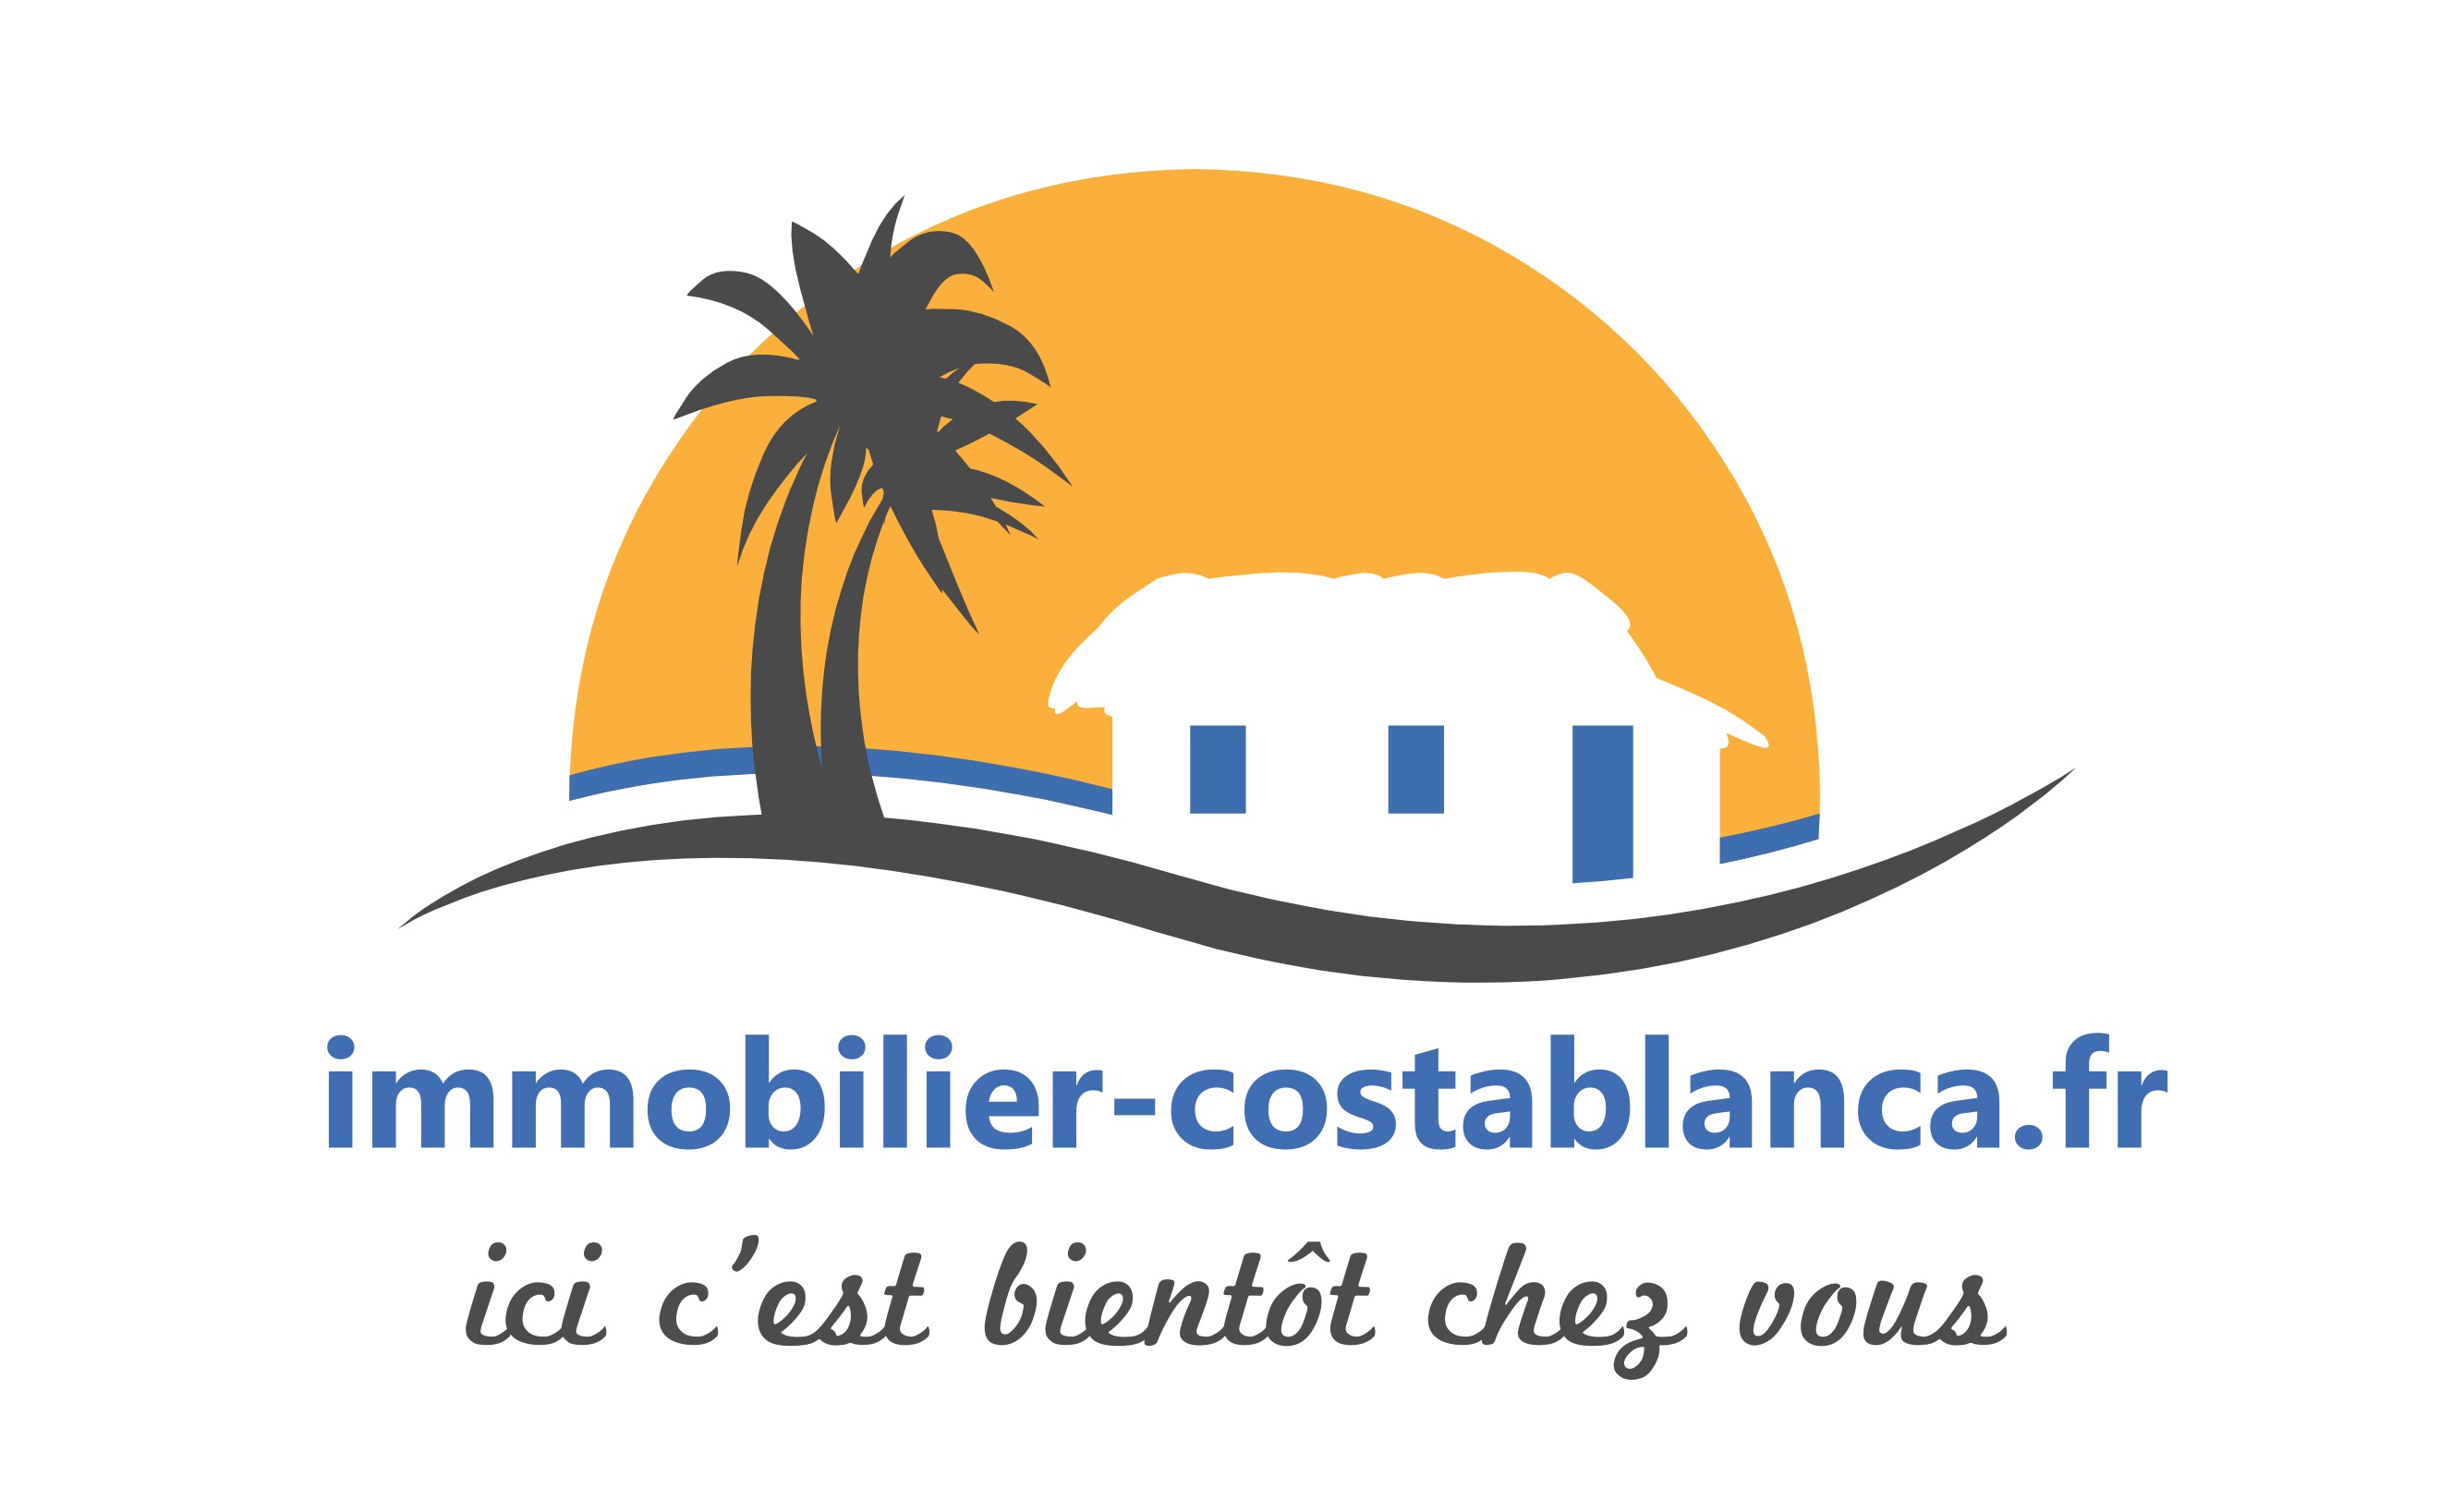 IMMOBILIER - COSTABLANCA.FR